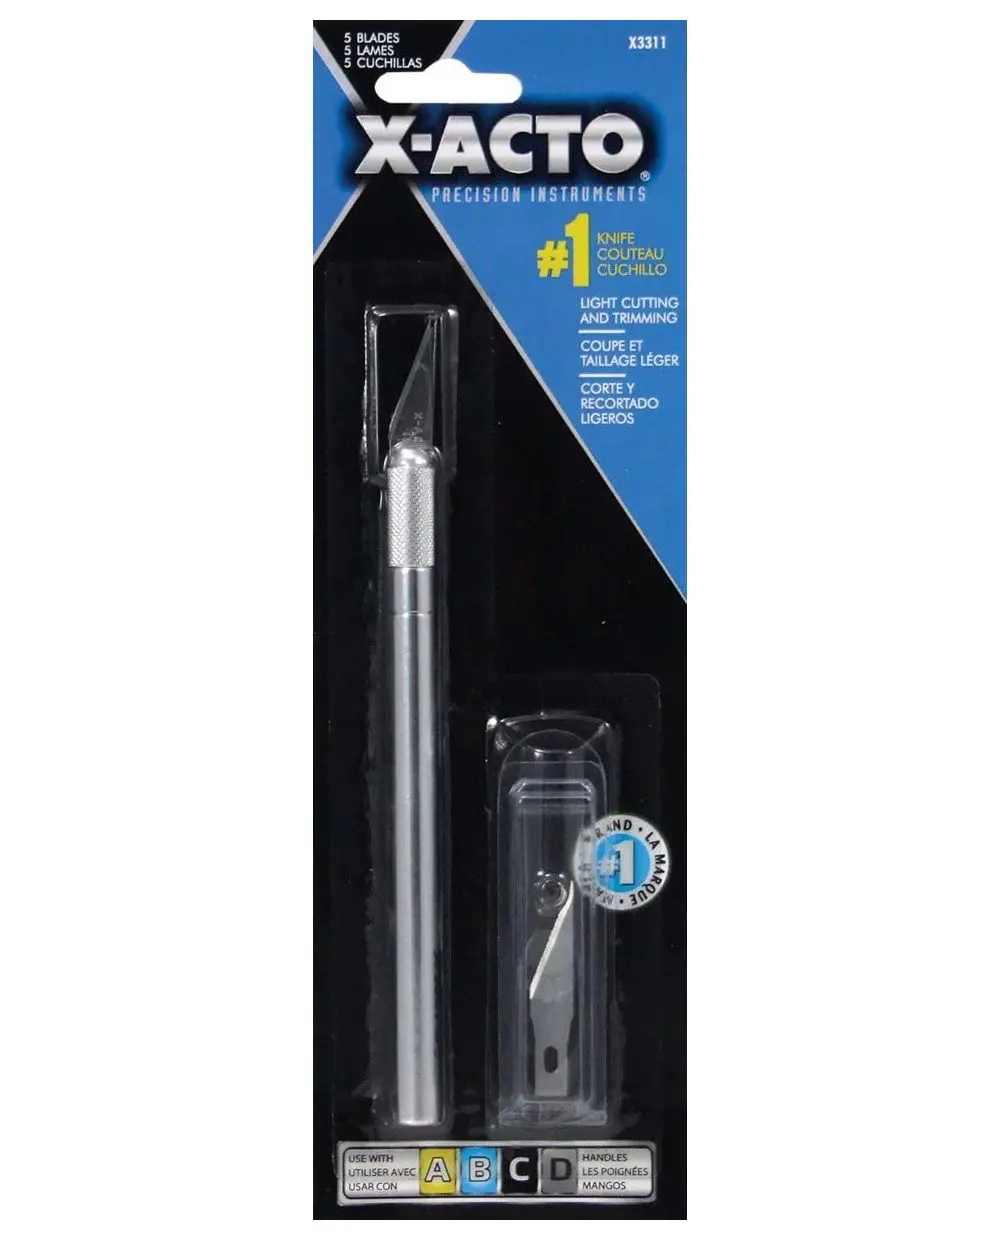 Xacto X3311 N0. 1 Precision Knife With 5 No. 11 Blades XACTO